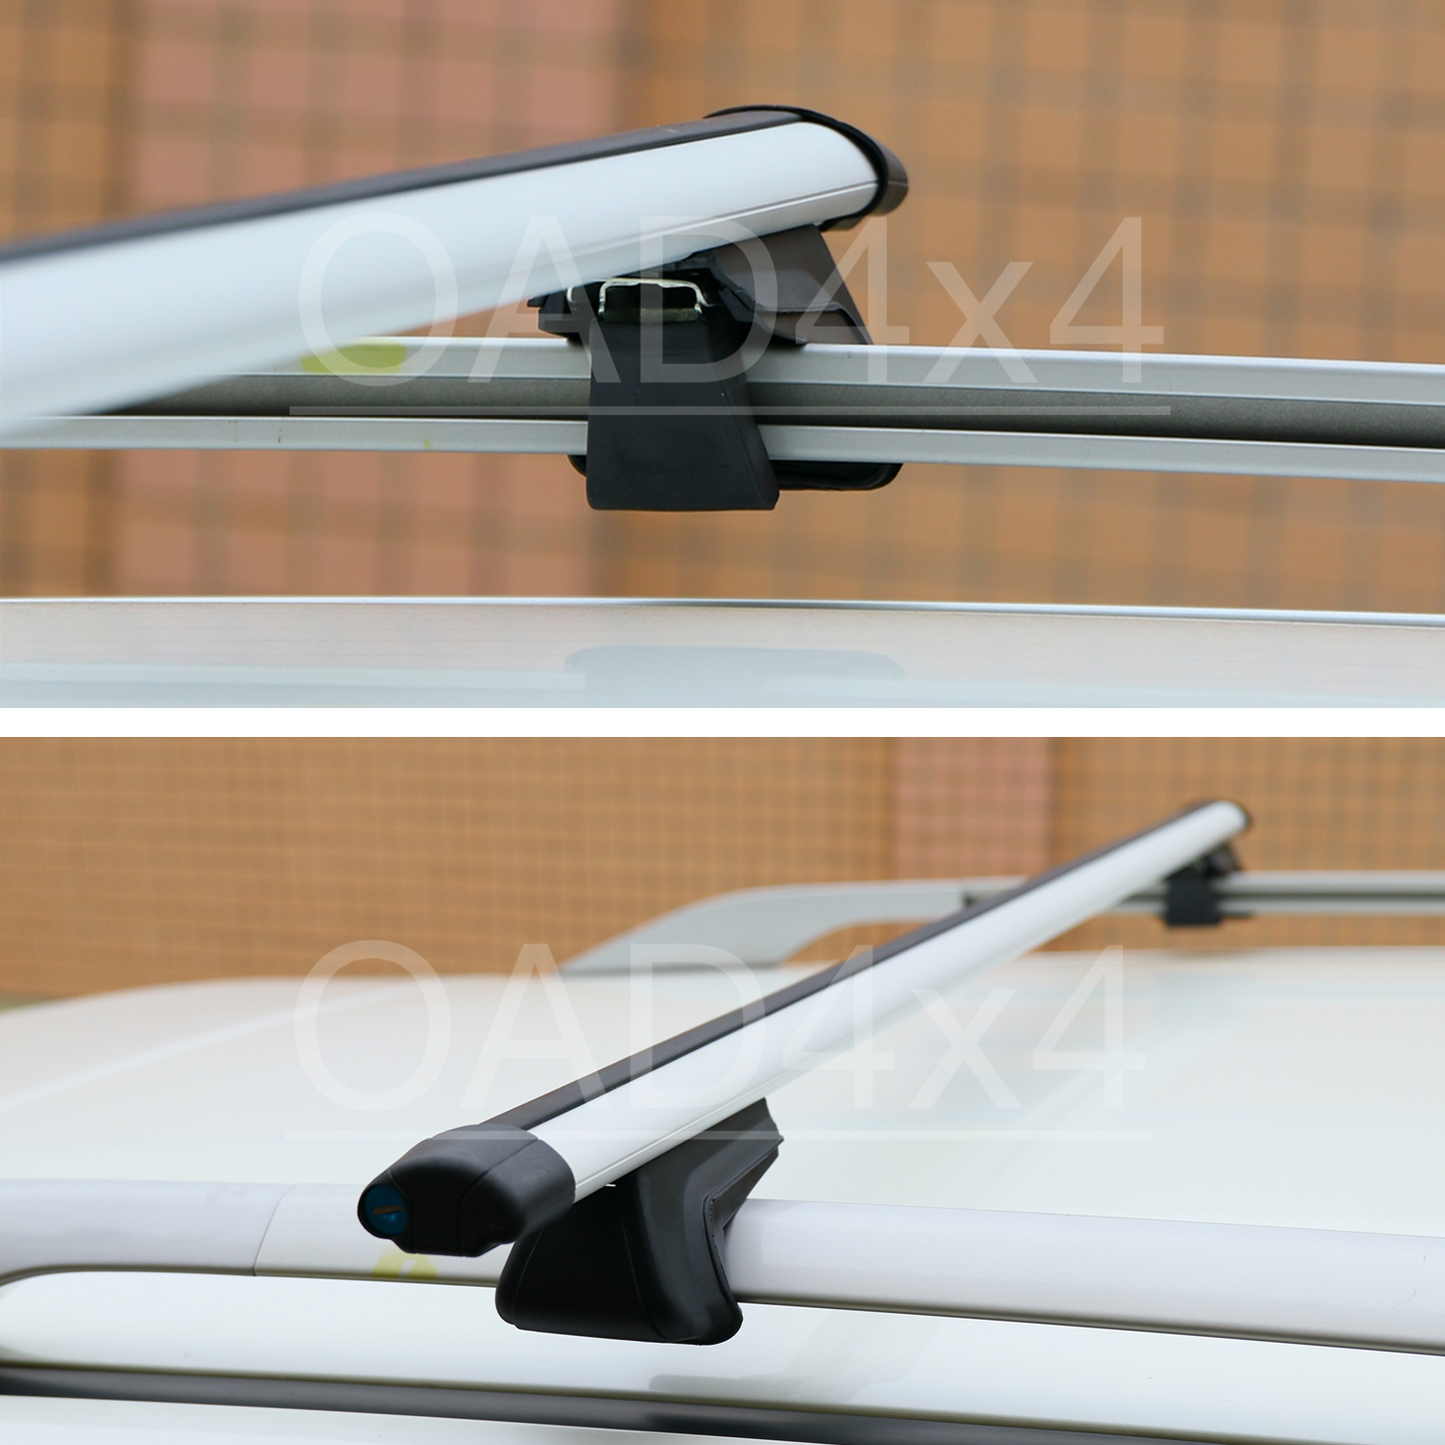 1 Pair Aluminum Silver Cross Bar Roof Racks Baggage holder for Nissan Patrol Y62 with raised roof rail